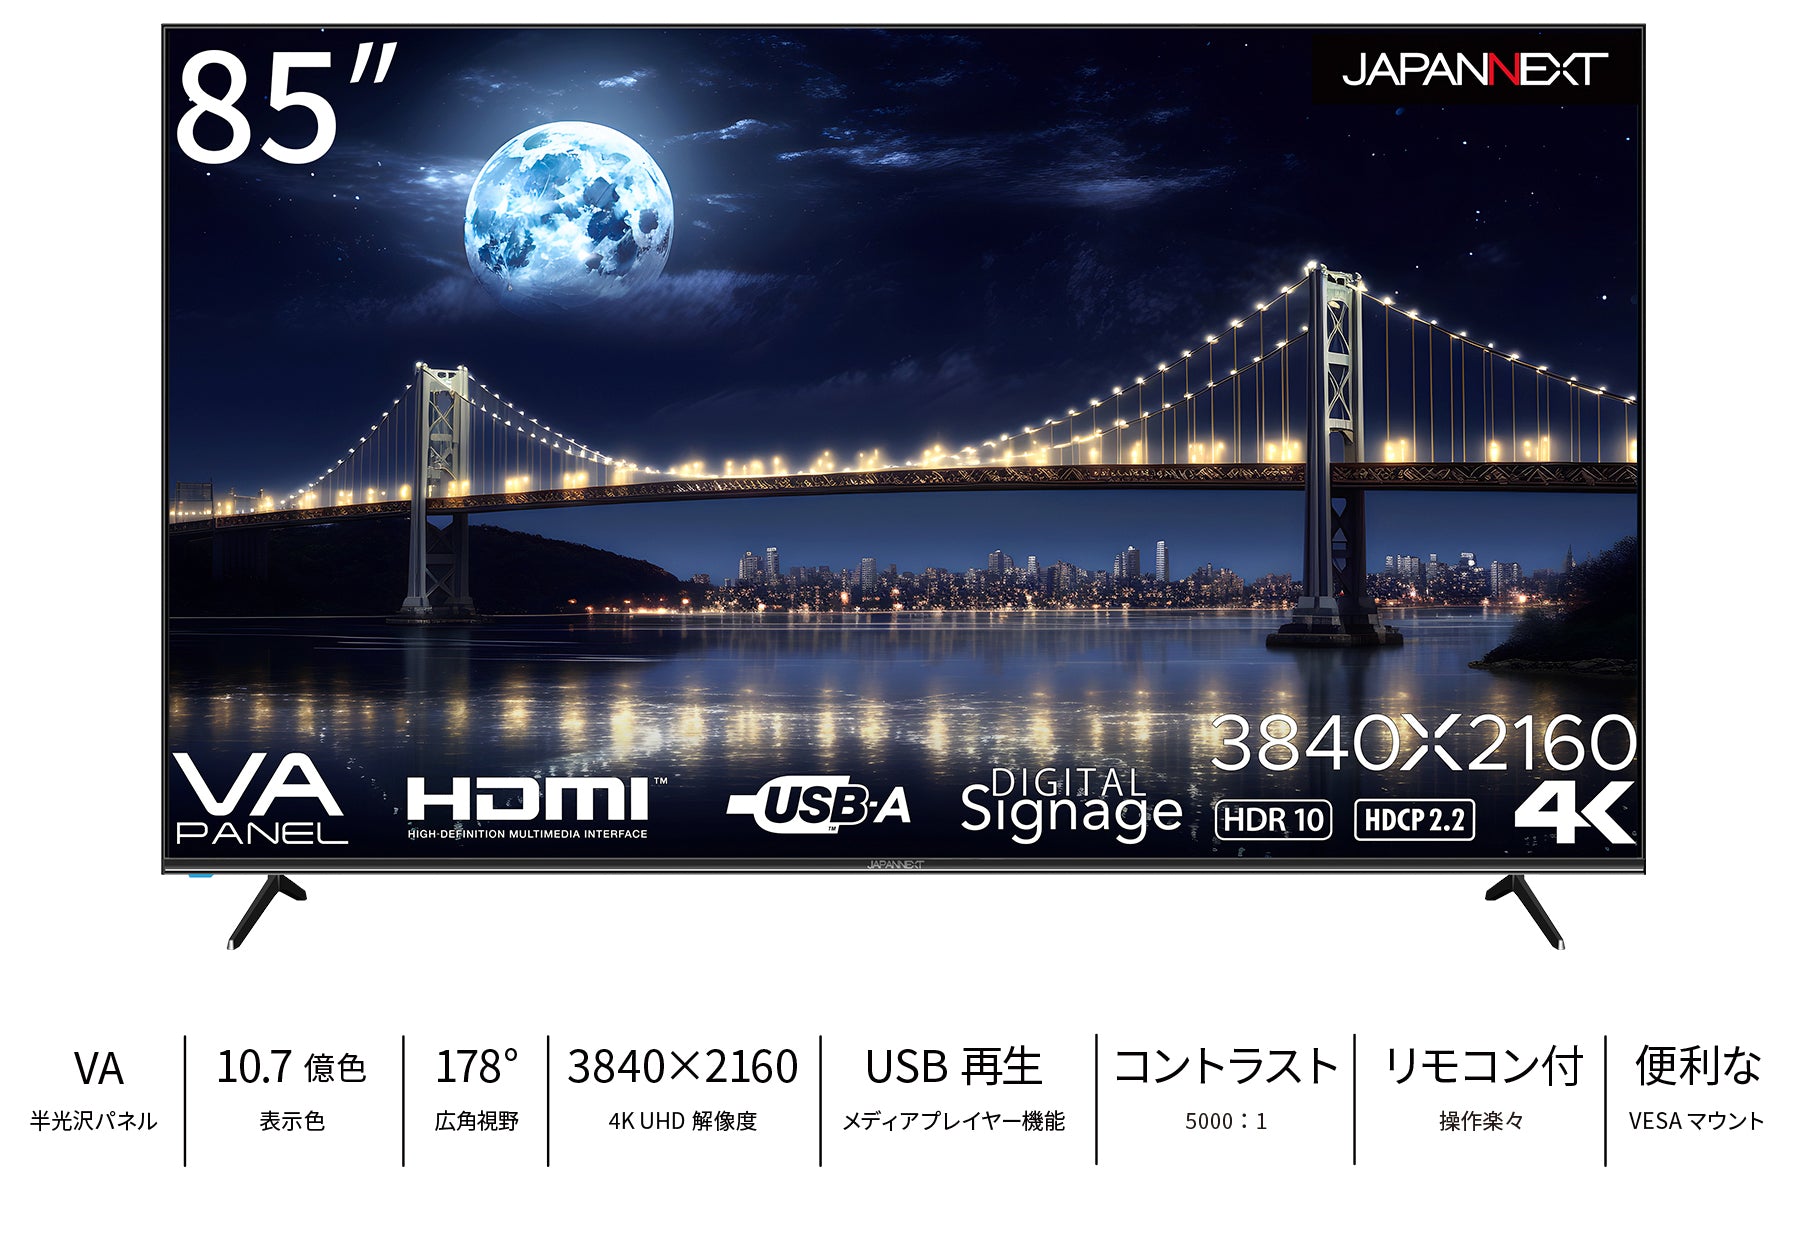 JAPANNEXT JN-IPS4300TUHD [43型 4K液晶モニター]